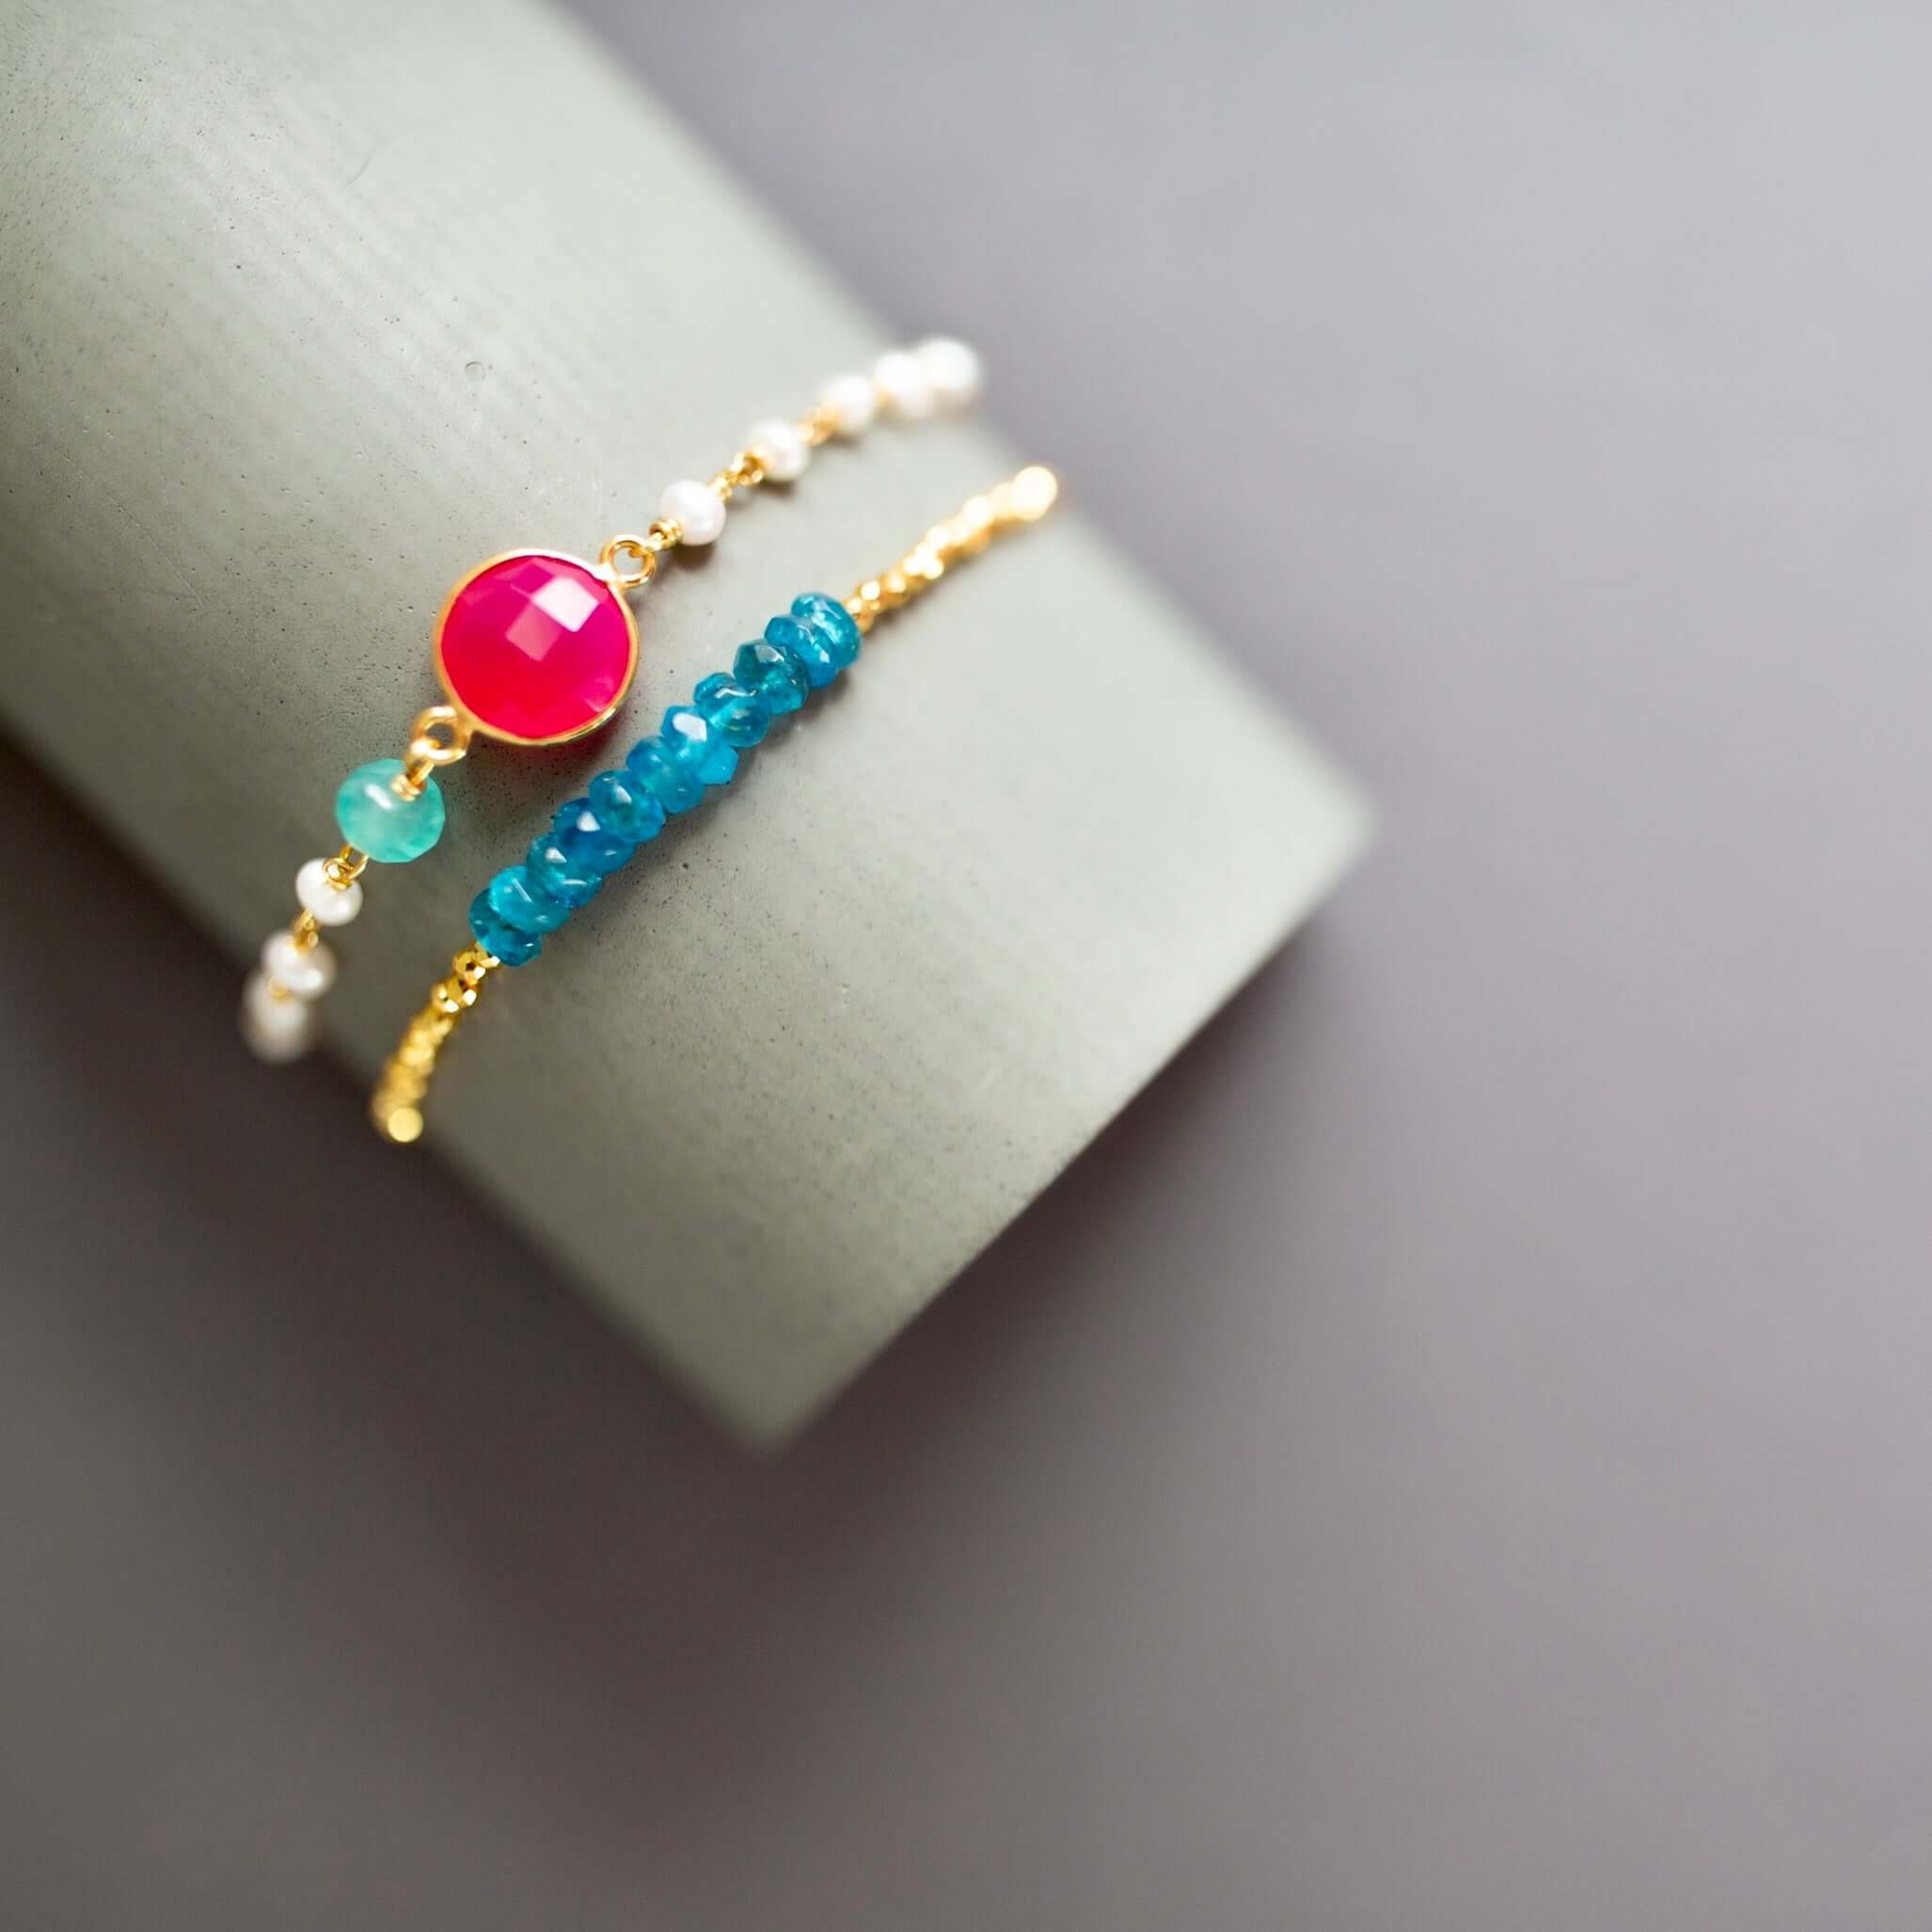 Adjustable Stacking Bracelet Set - Sparkling Gemstones in Hot Pink Chalcedony and Neon Blue